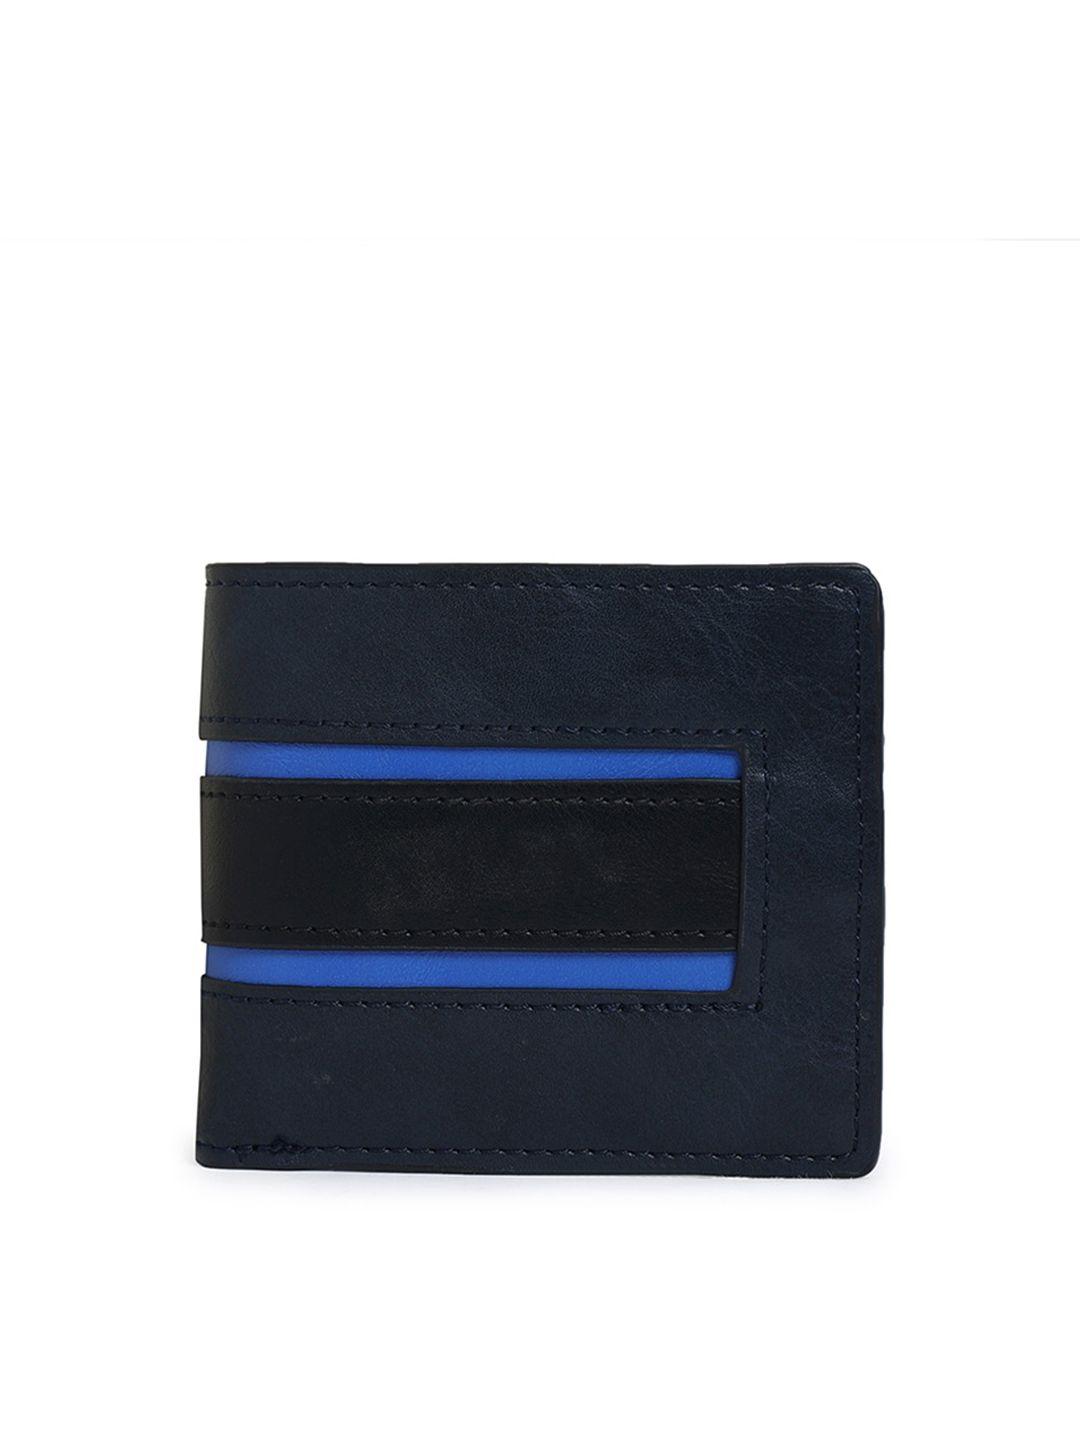 aldo men navy blue & black solid two fold wallet